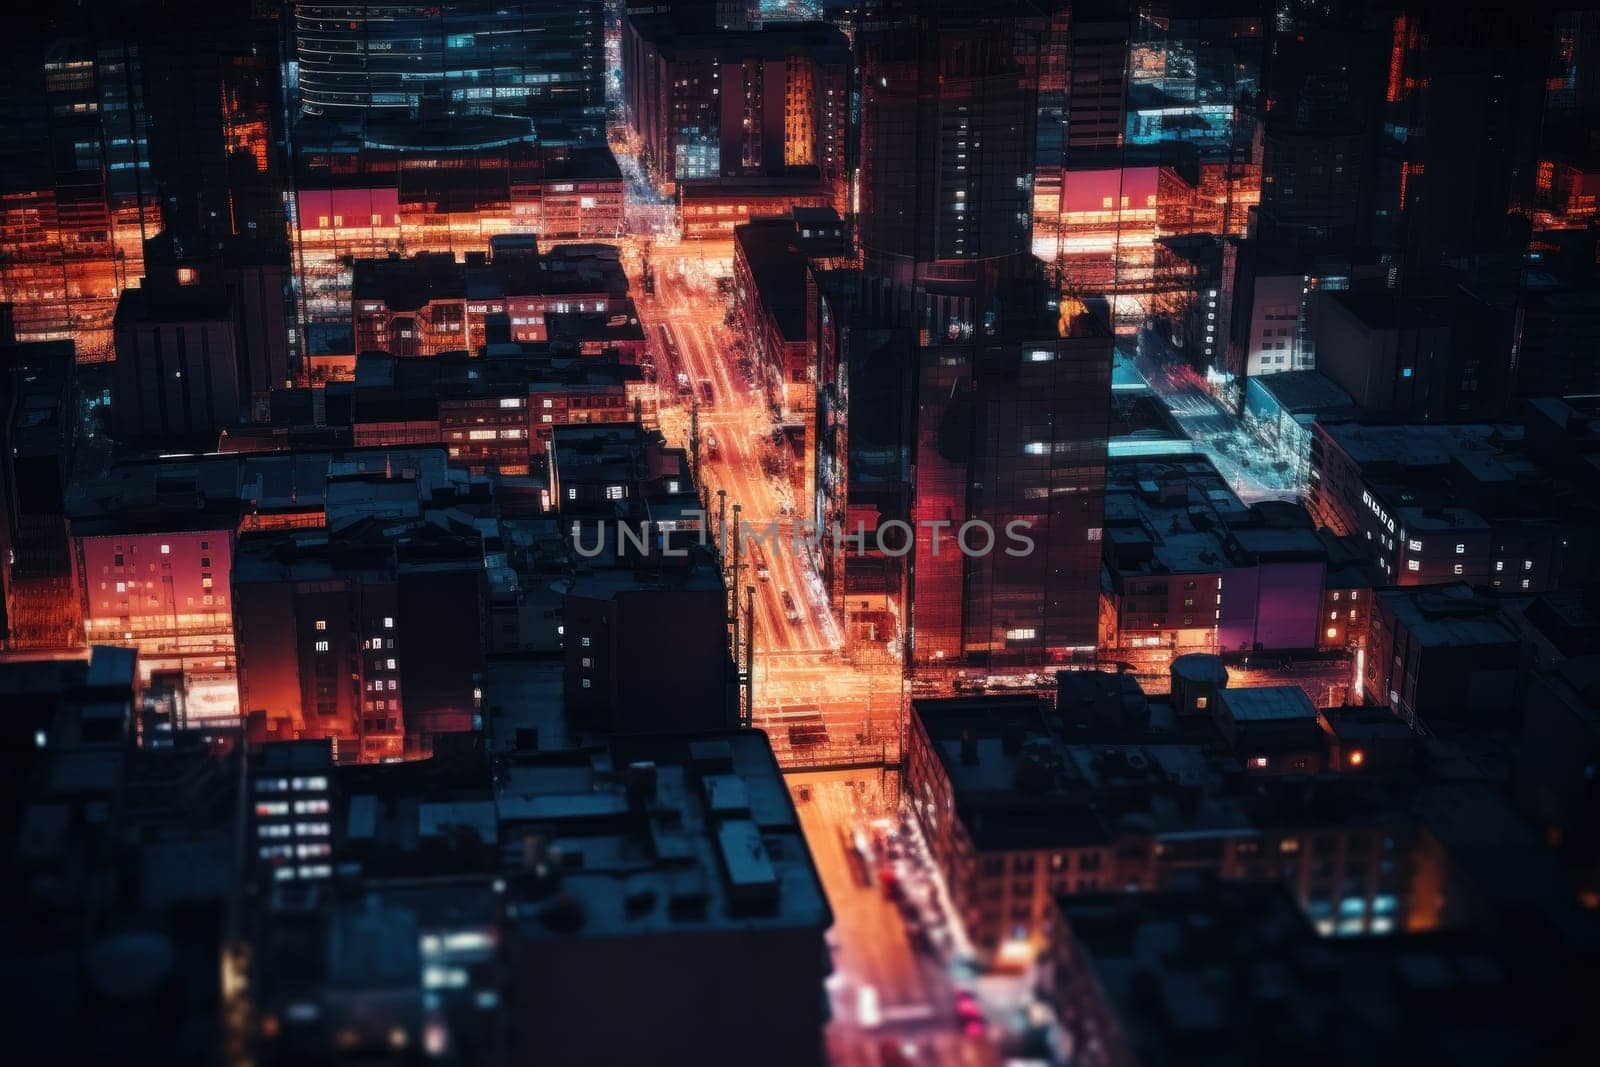 Aerial view of neon city, Cyberpunk metropolis at night by nijieimu